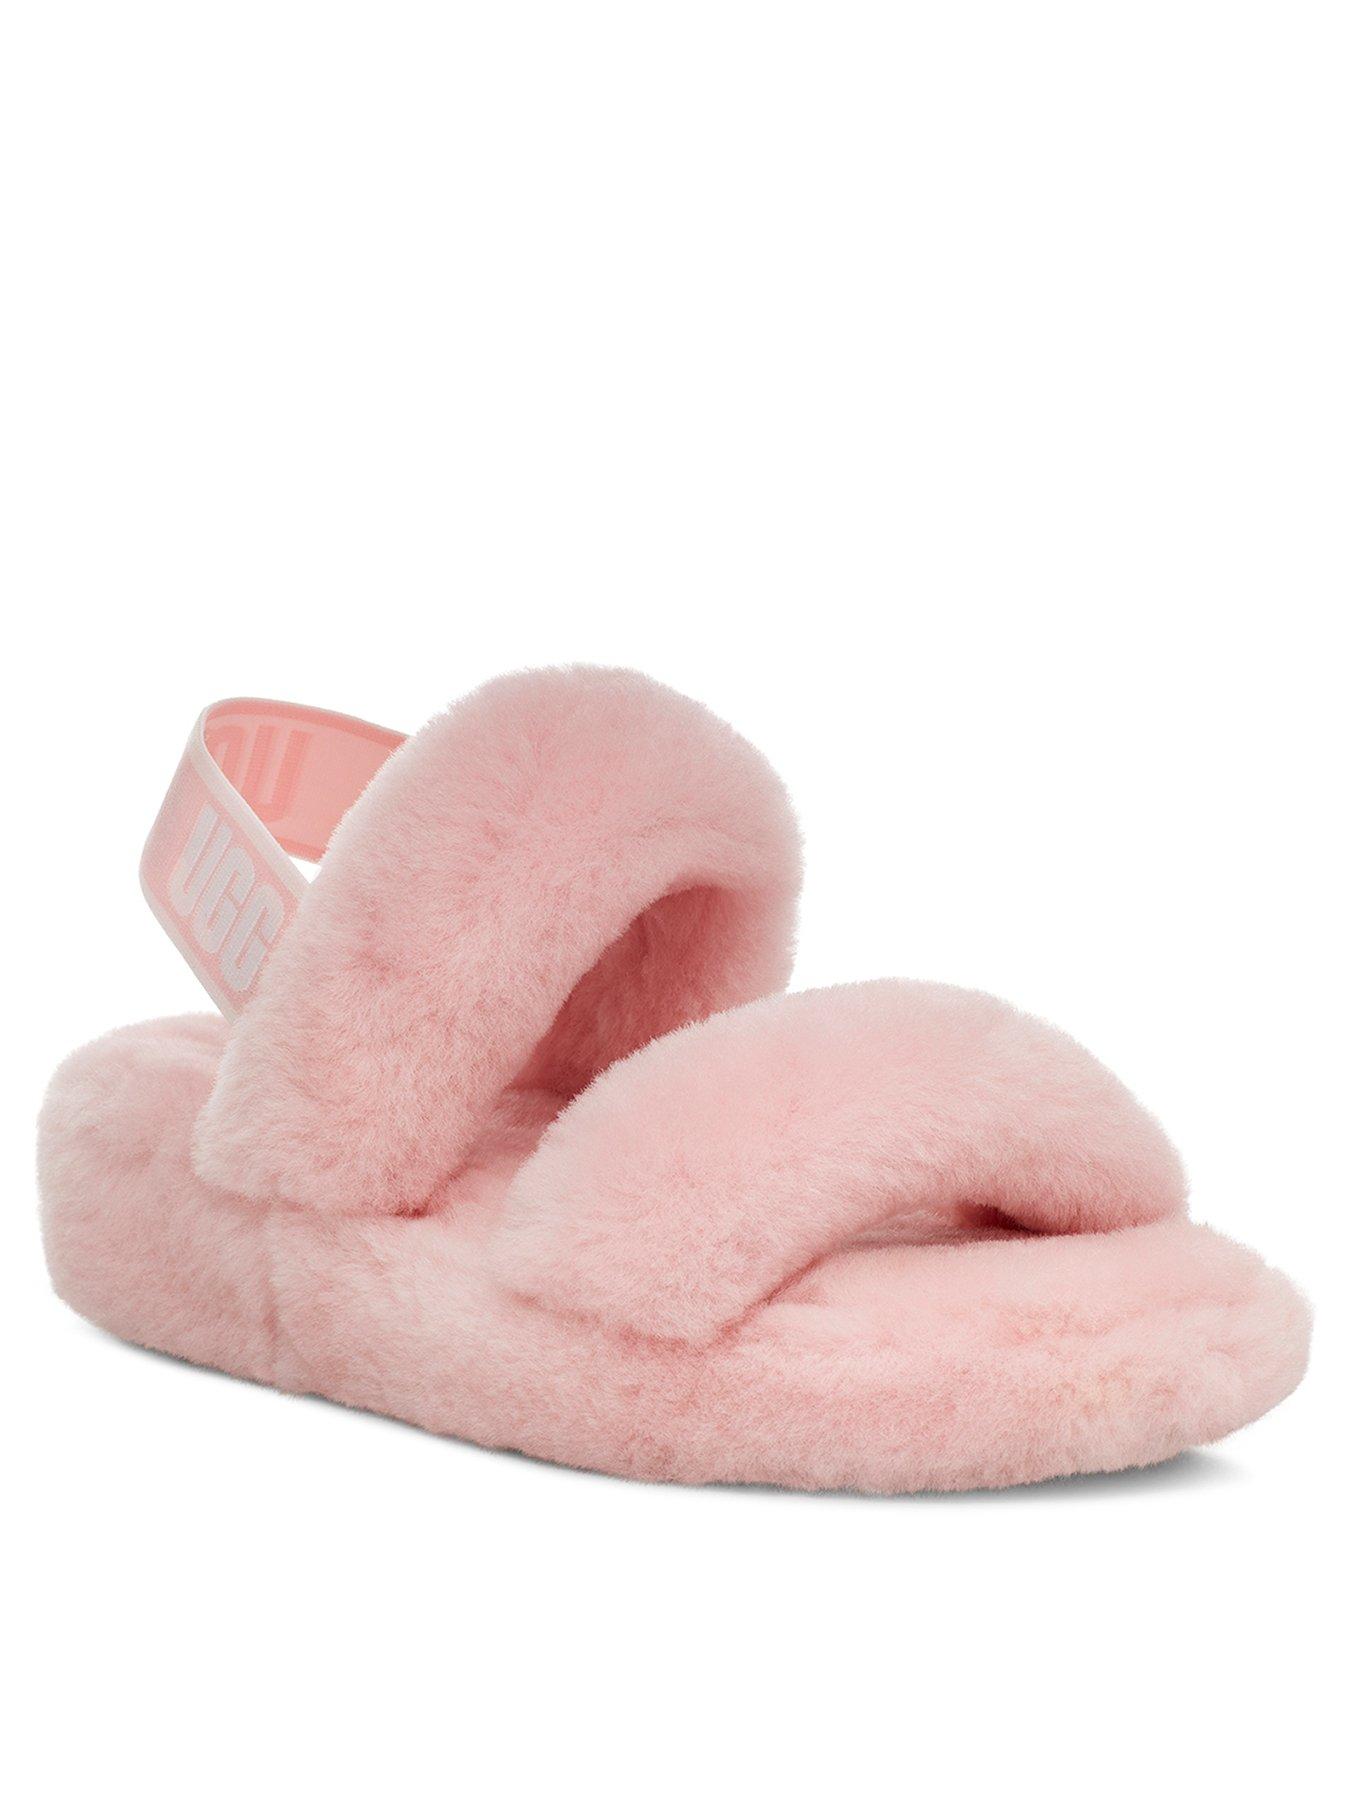 very ugg slippers